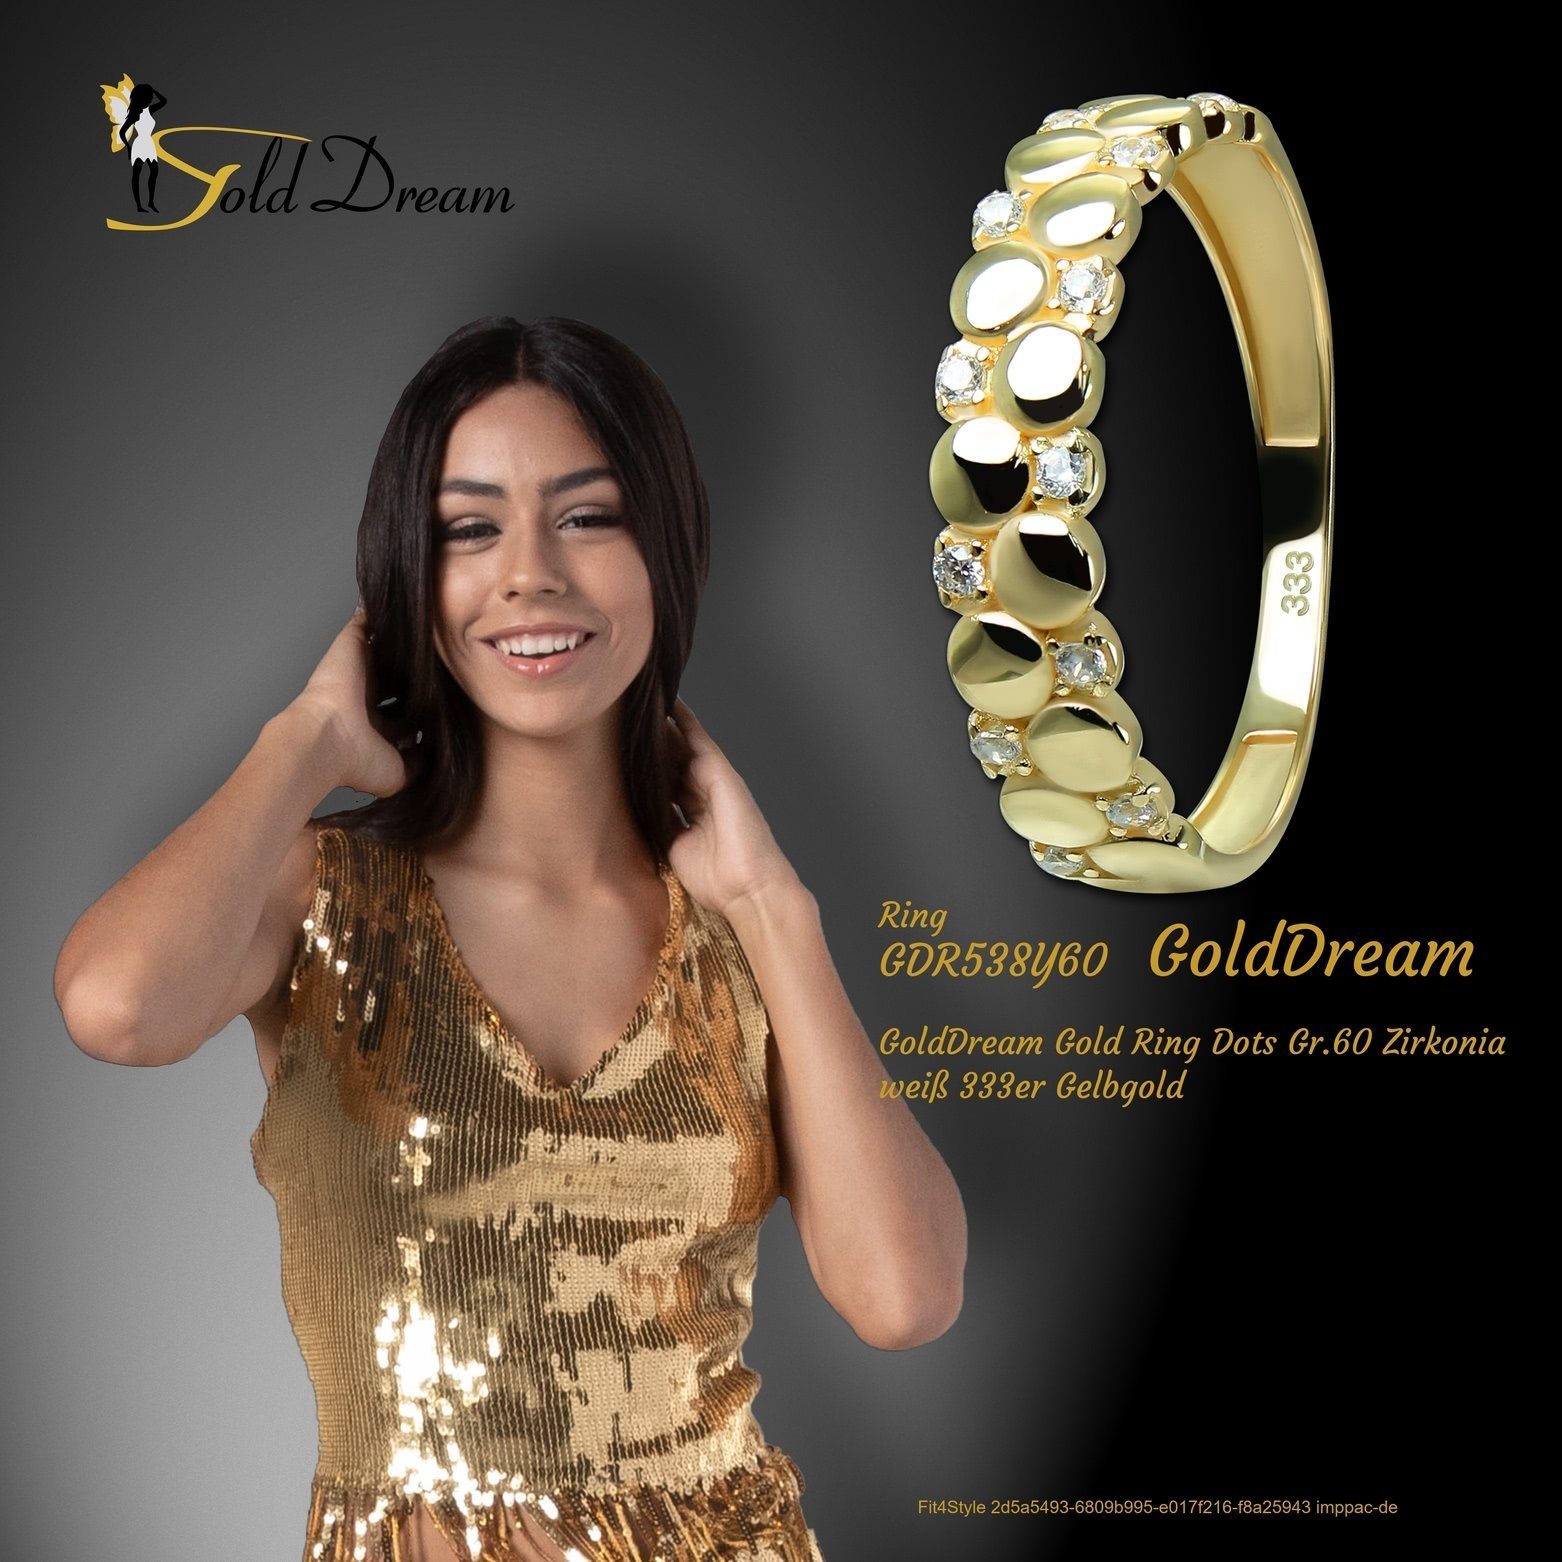 weiß 8 Karat, Gold - 333 Gelbgold Zirkonia Farbe: gold, Gr.60 GoldDream GoldDream Ring Goldring Damen Dots Dots (Fingerring), Ring